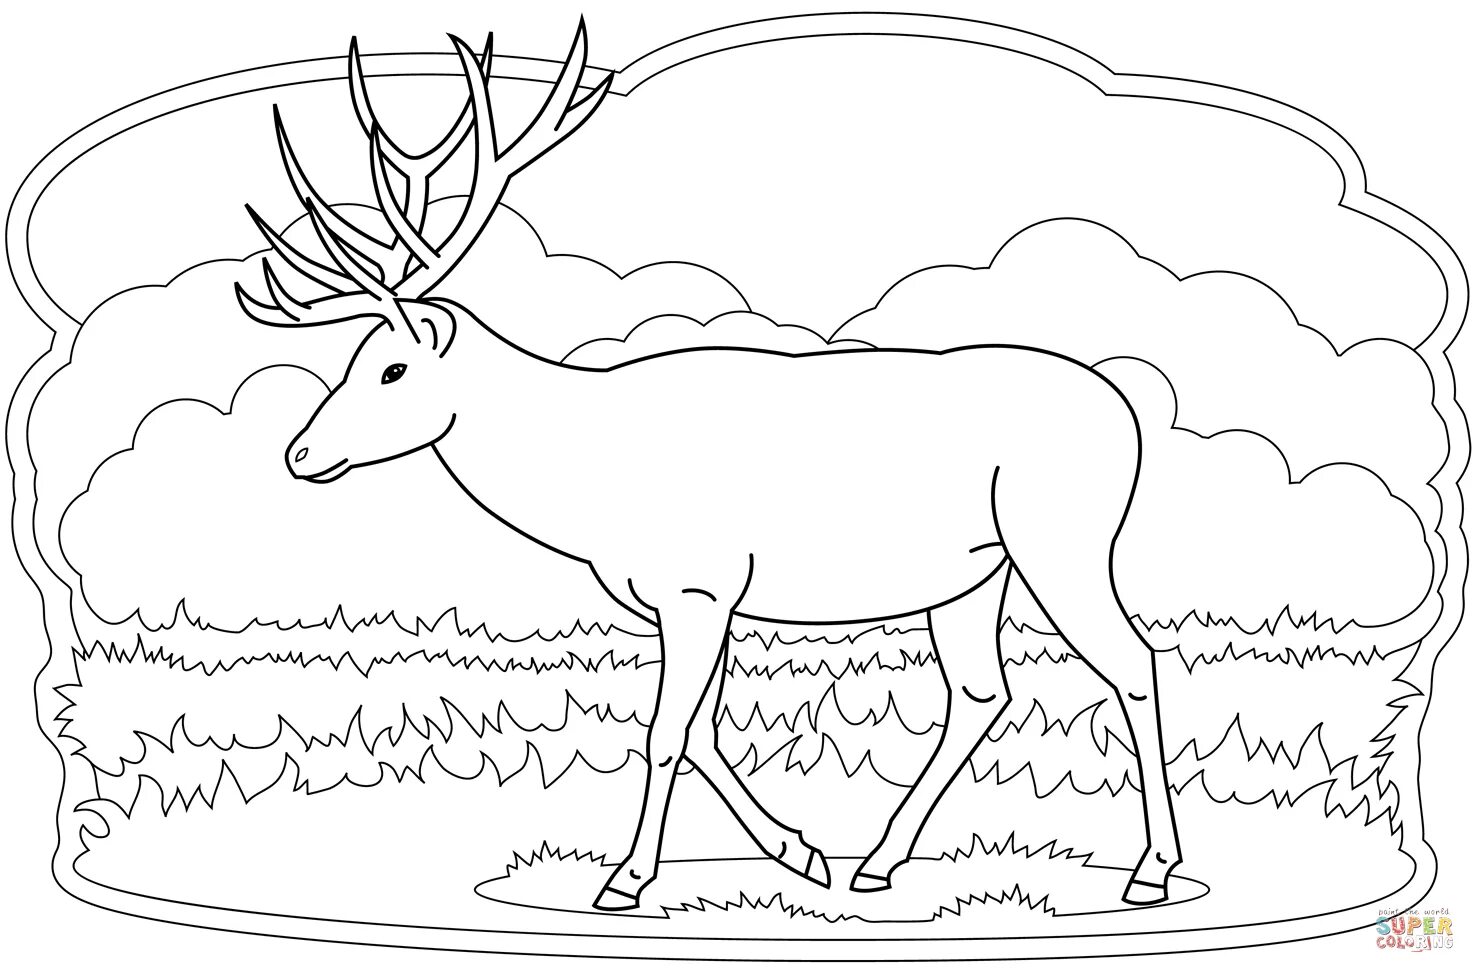 Poetic coloring deer for children 6-7 years old